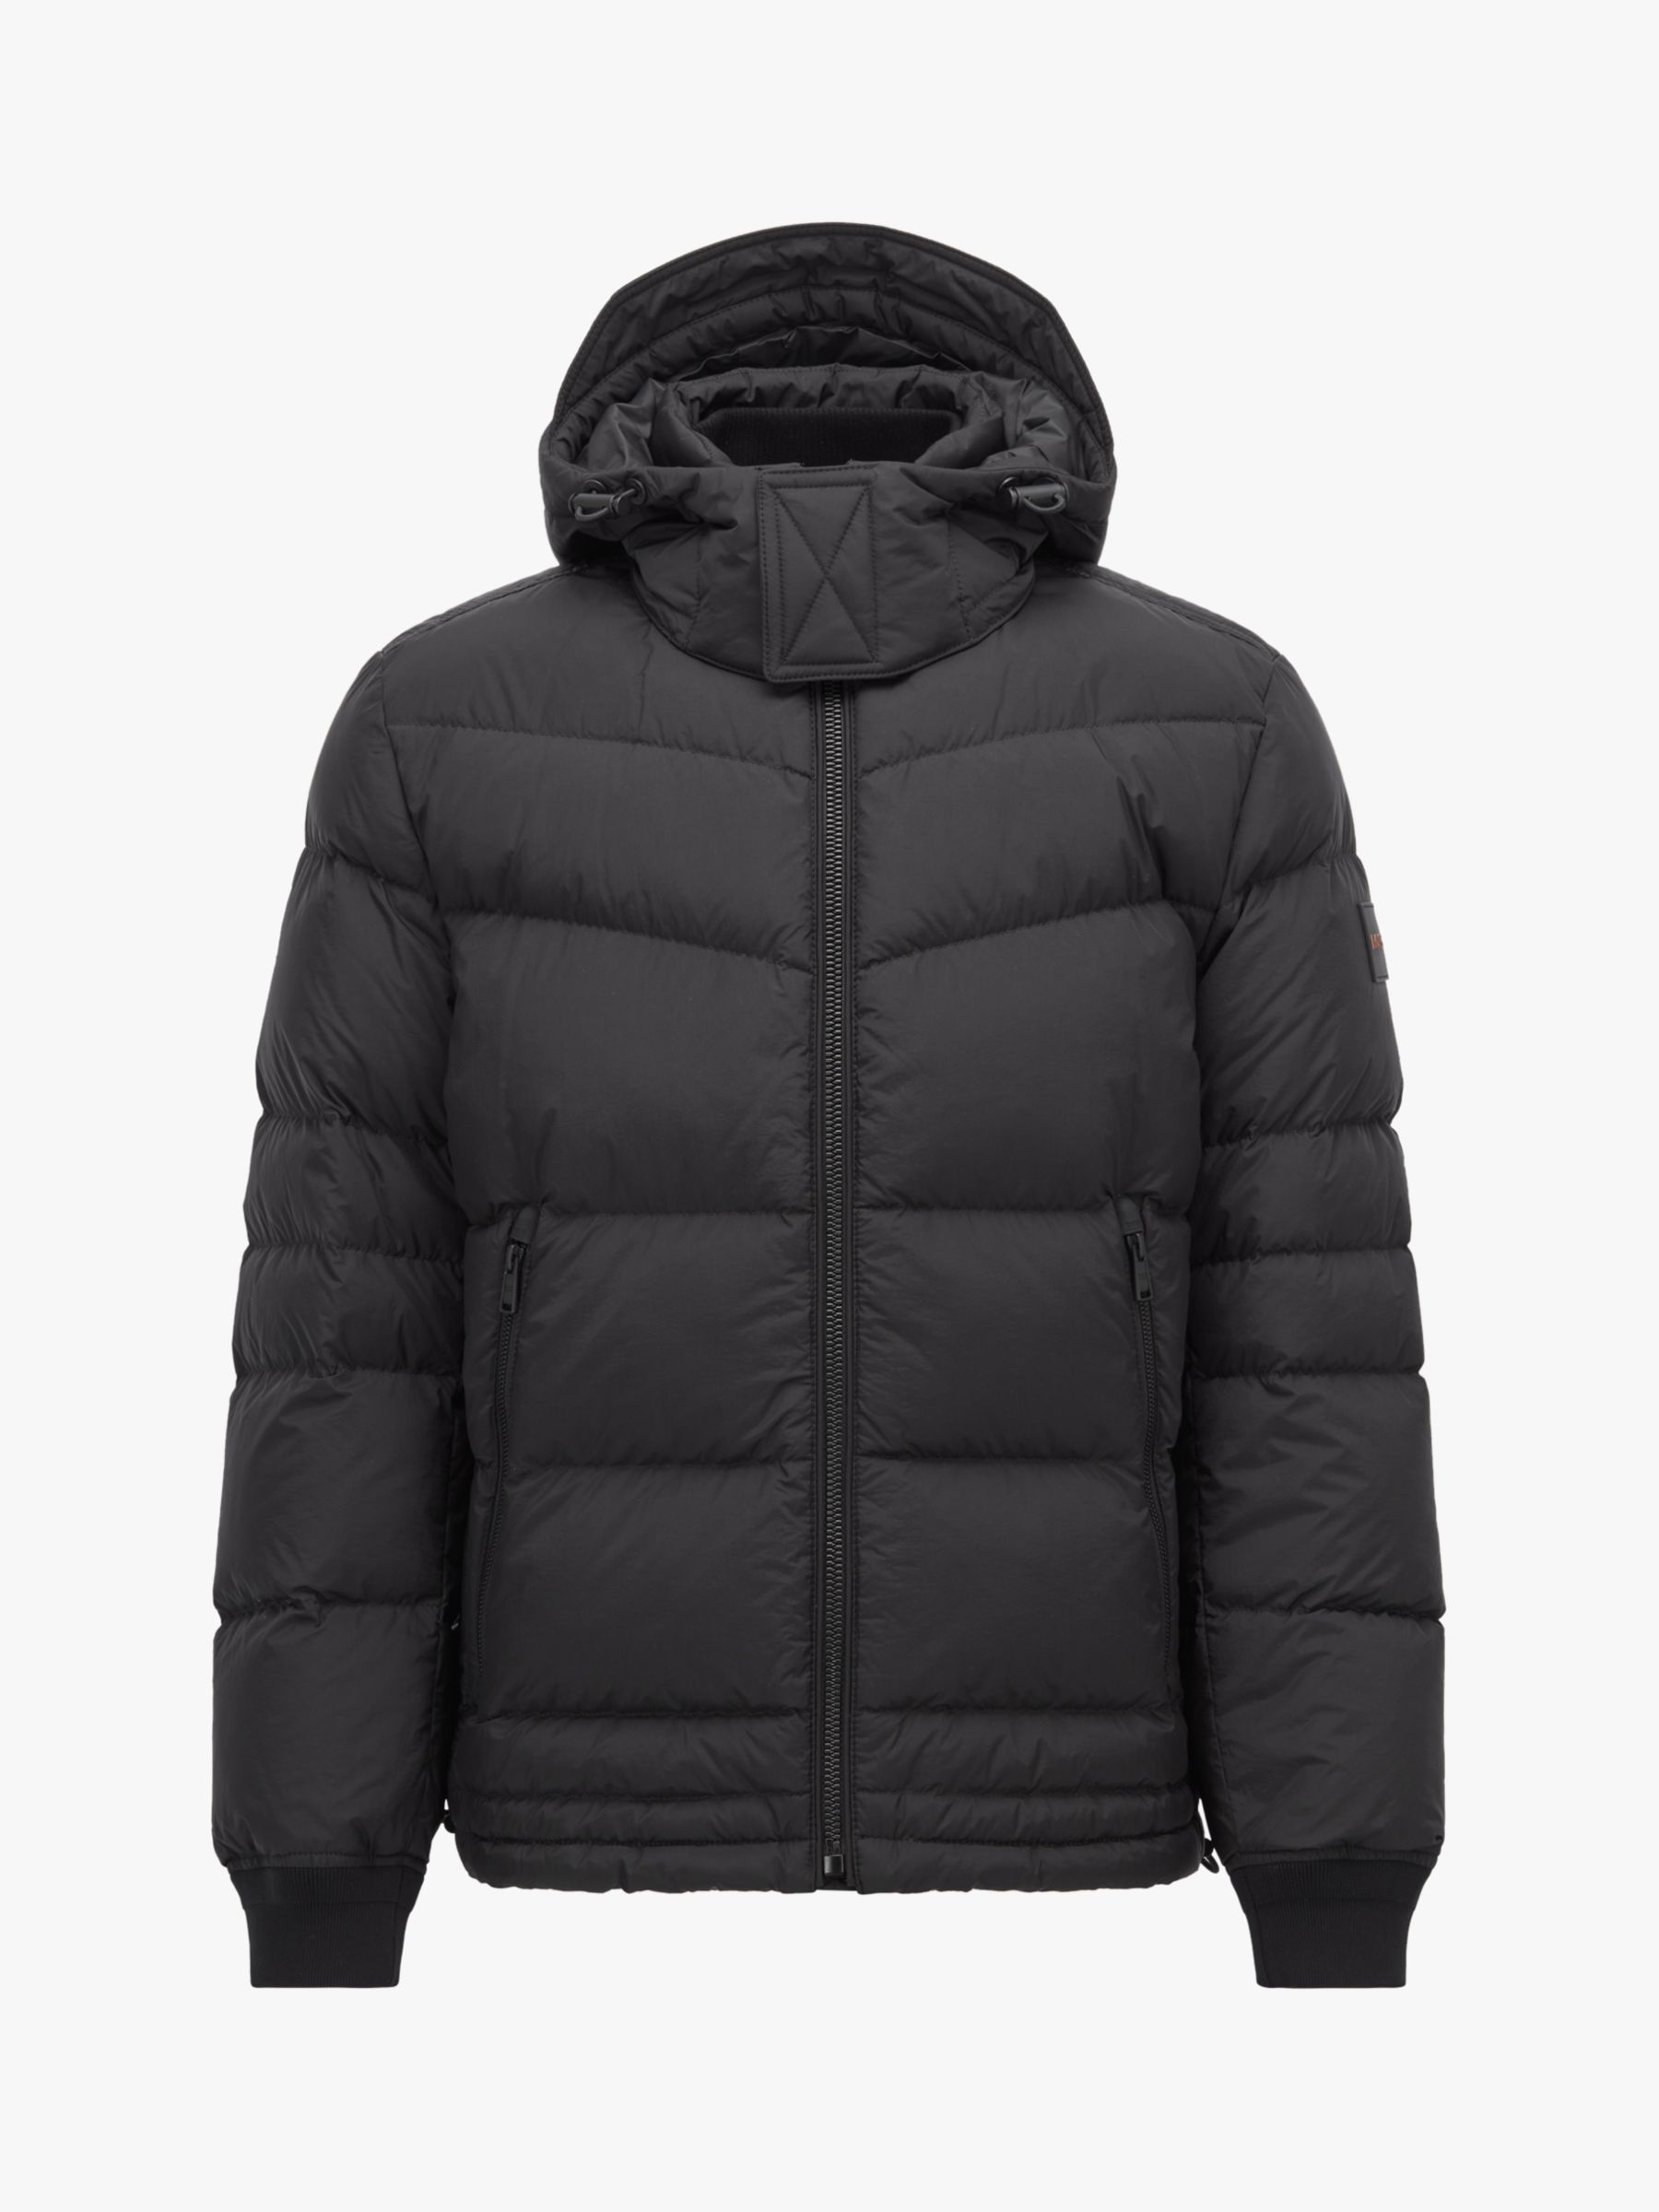 BOSS Otu Hooded Quilted Jacket, Black at John Lewis & Partners